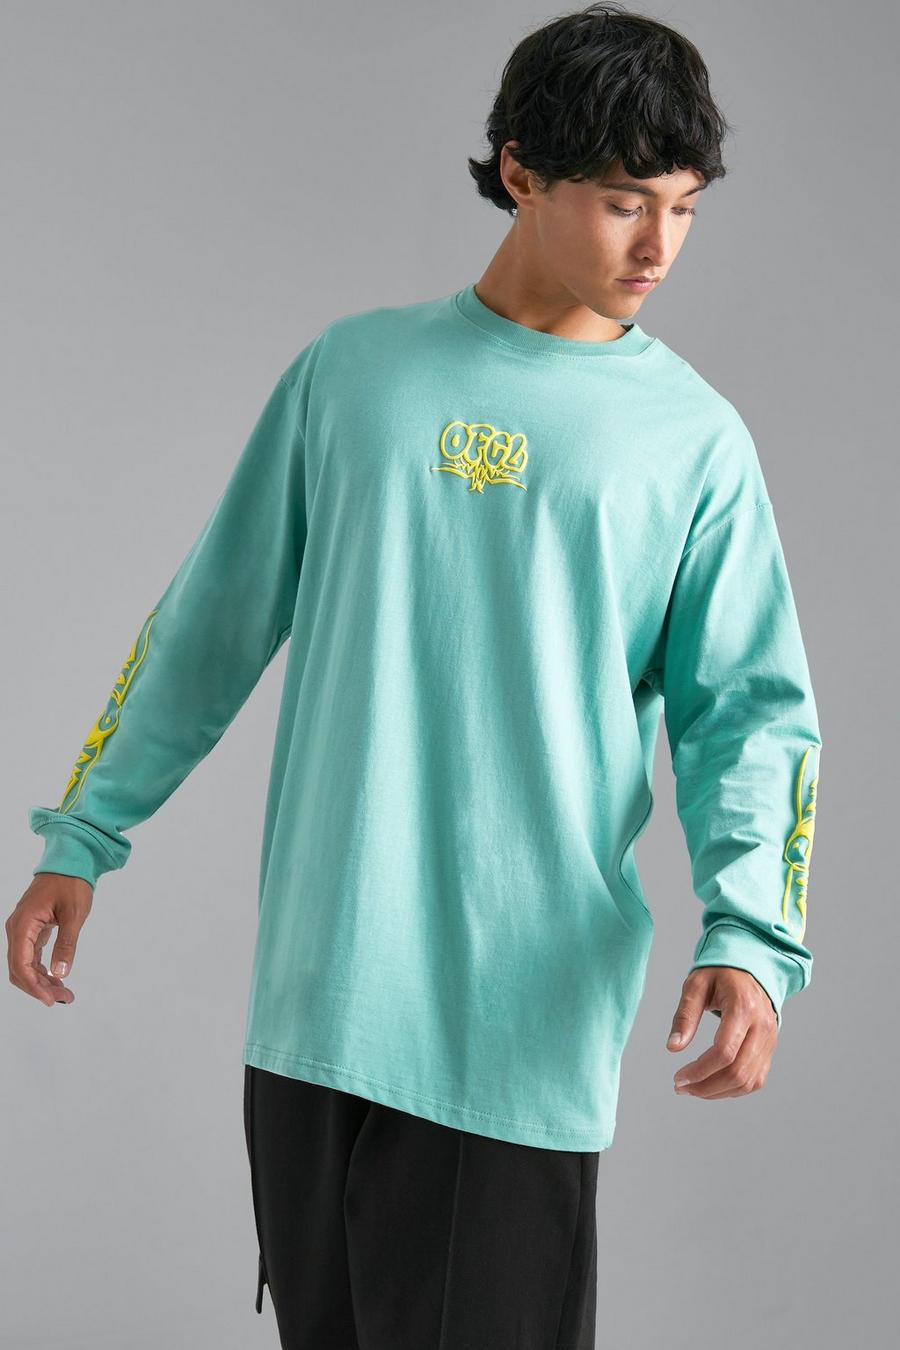 Camiseta oversize de manga larga con estampado gráfico Ofcl, Teal verde